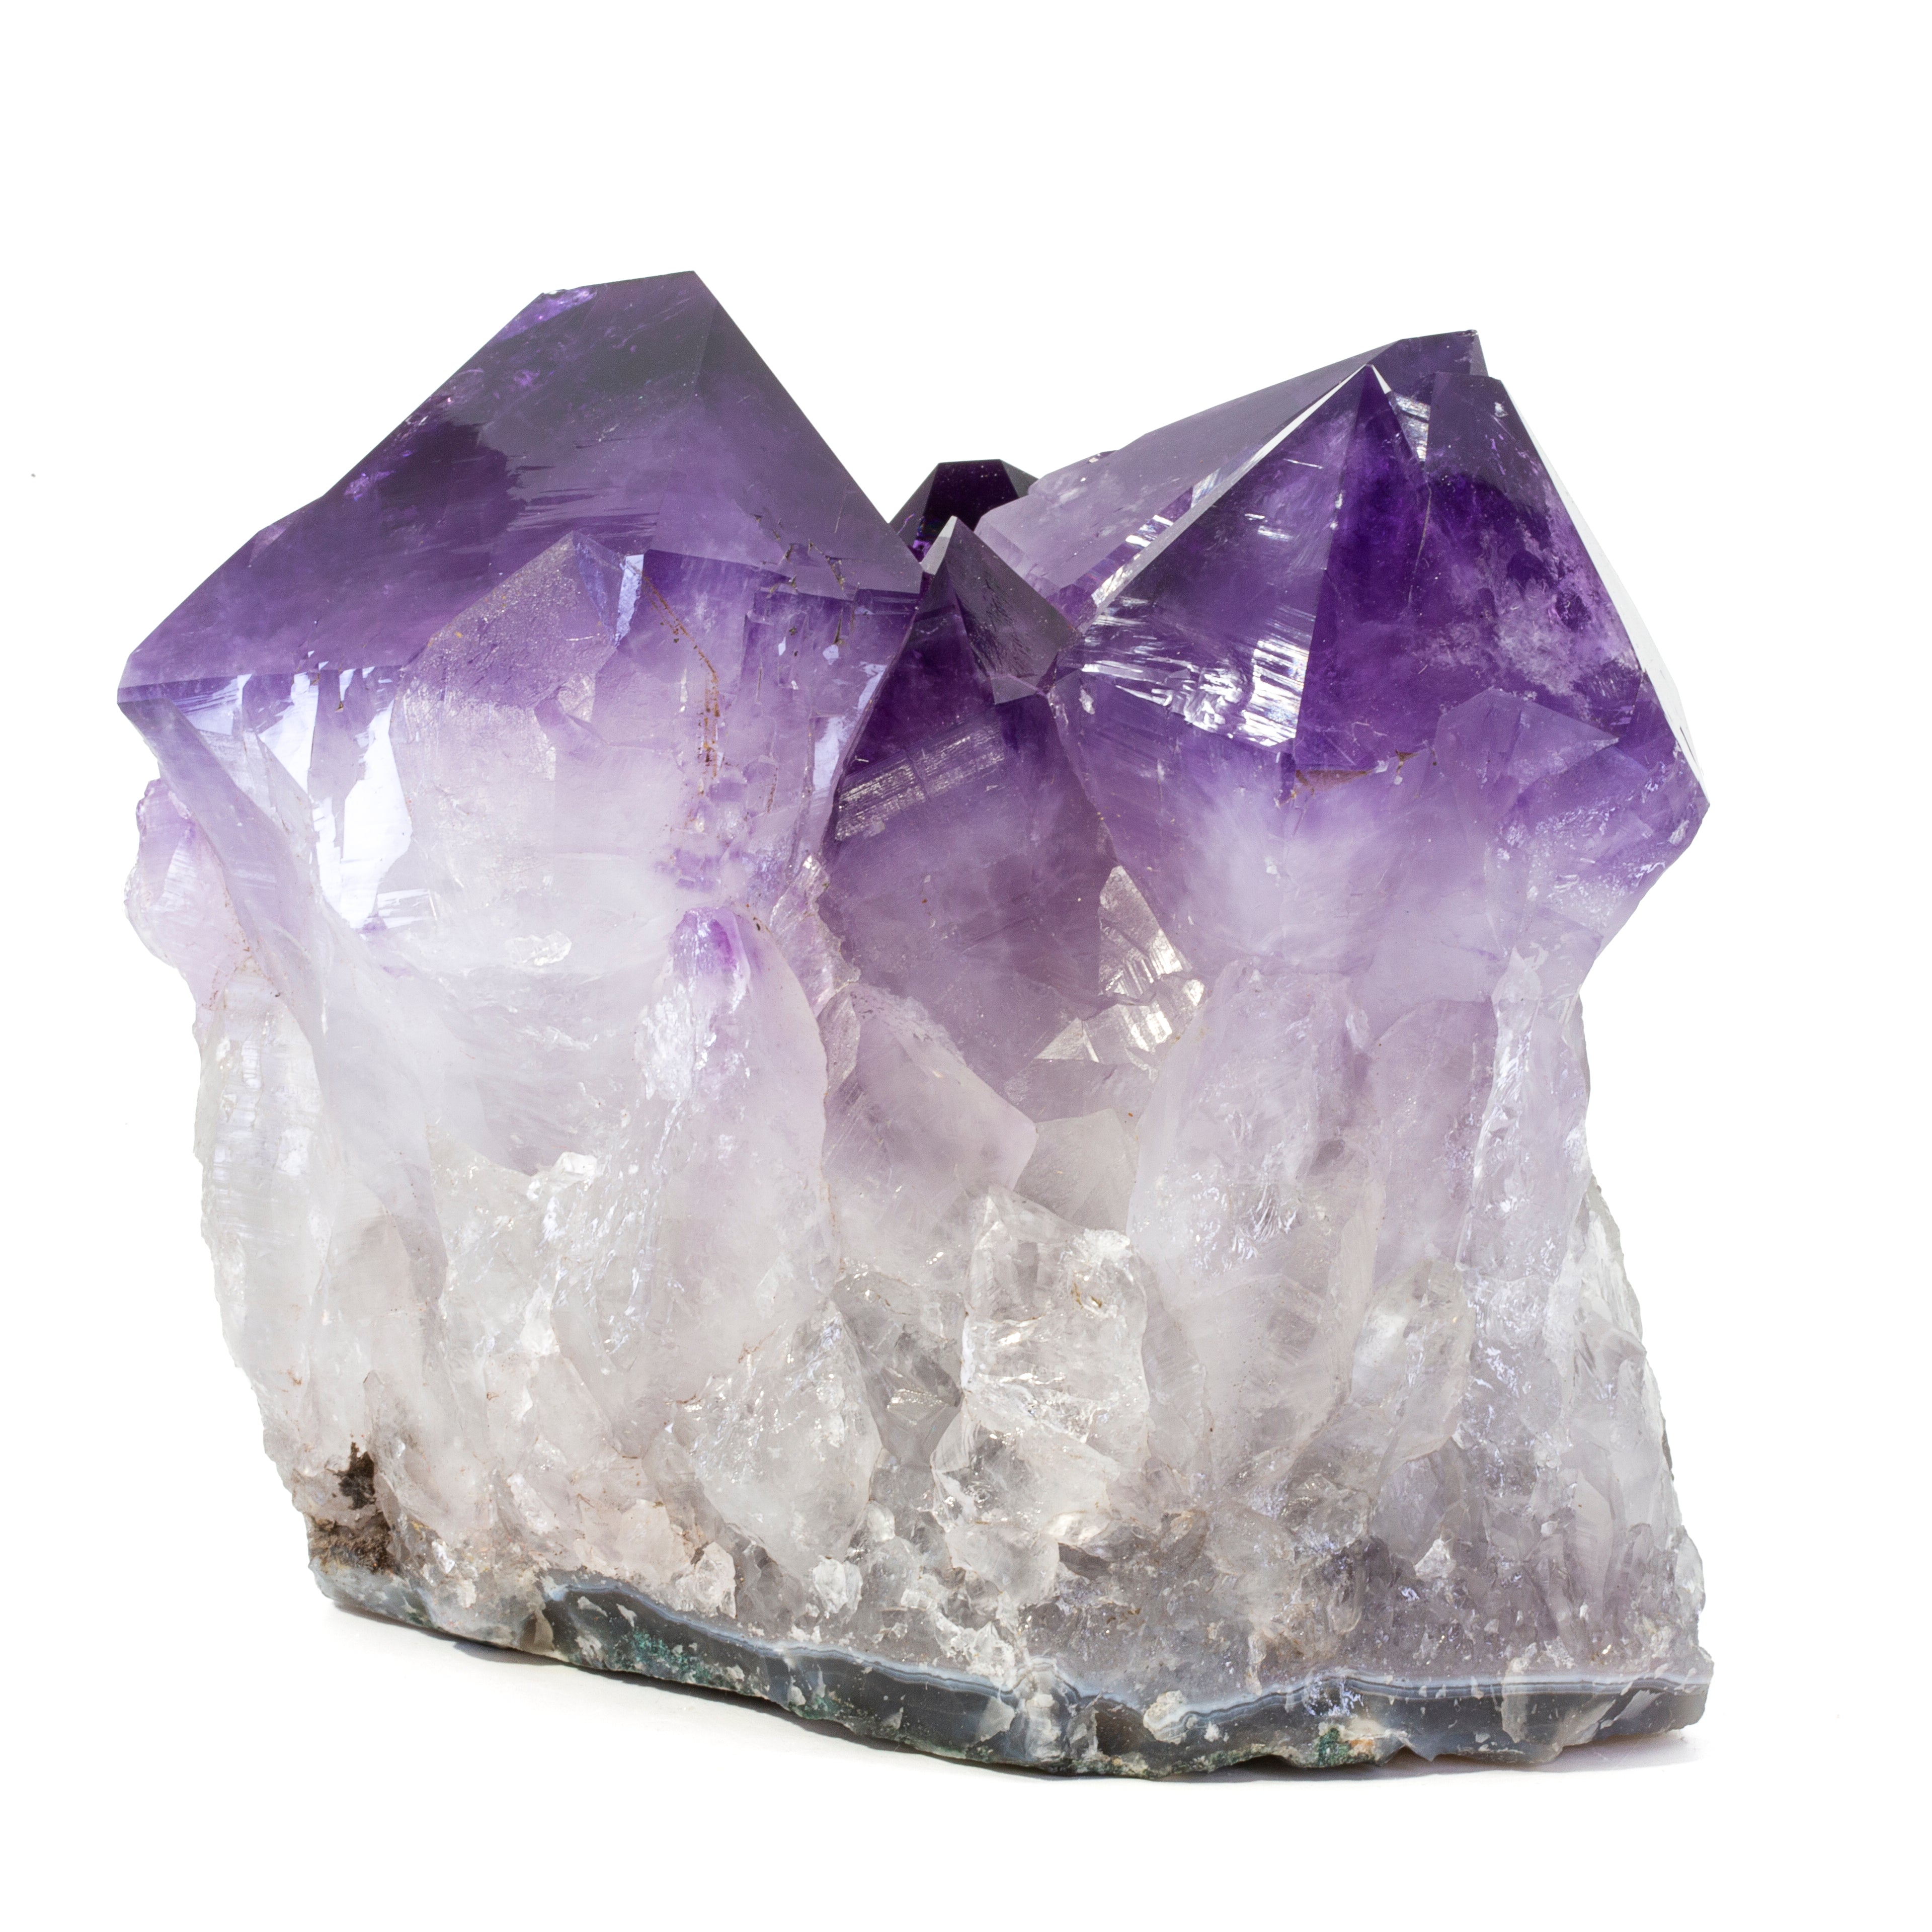 Amethyst 5.8 inch 6.2 lb Natural Crystal Cluster - Brazil - JJX-239 - Crystalarium